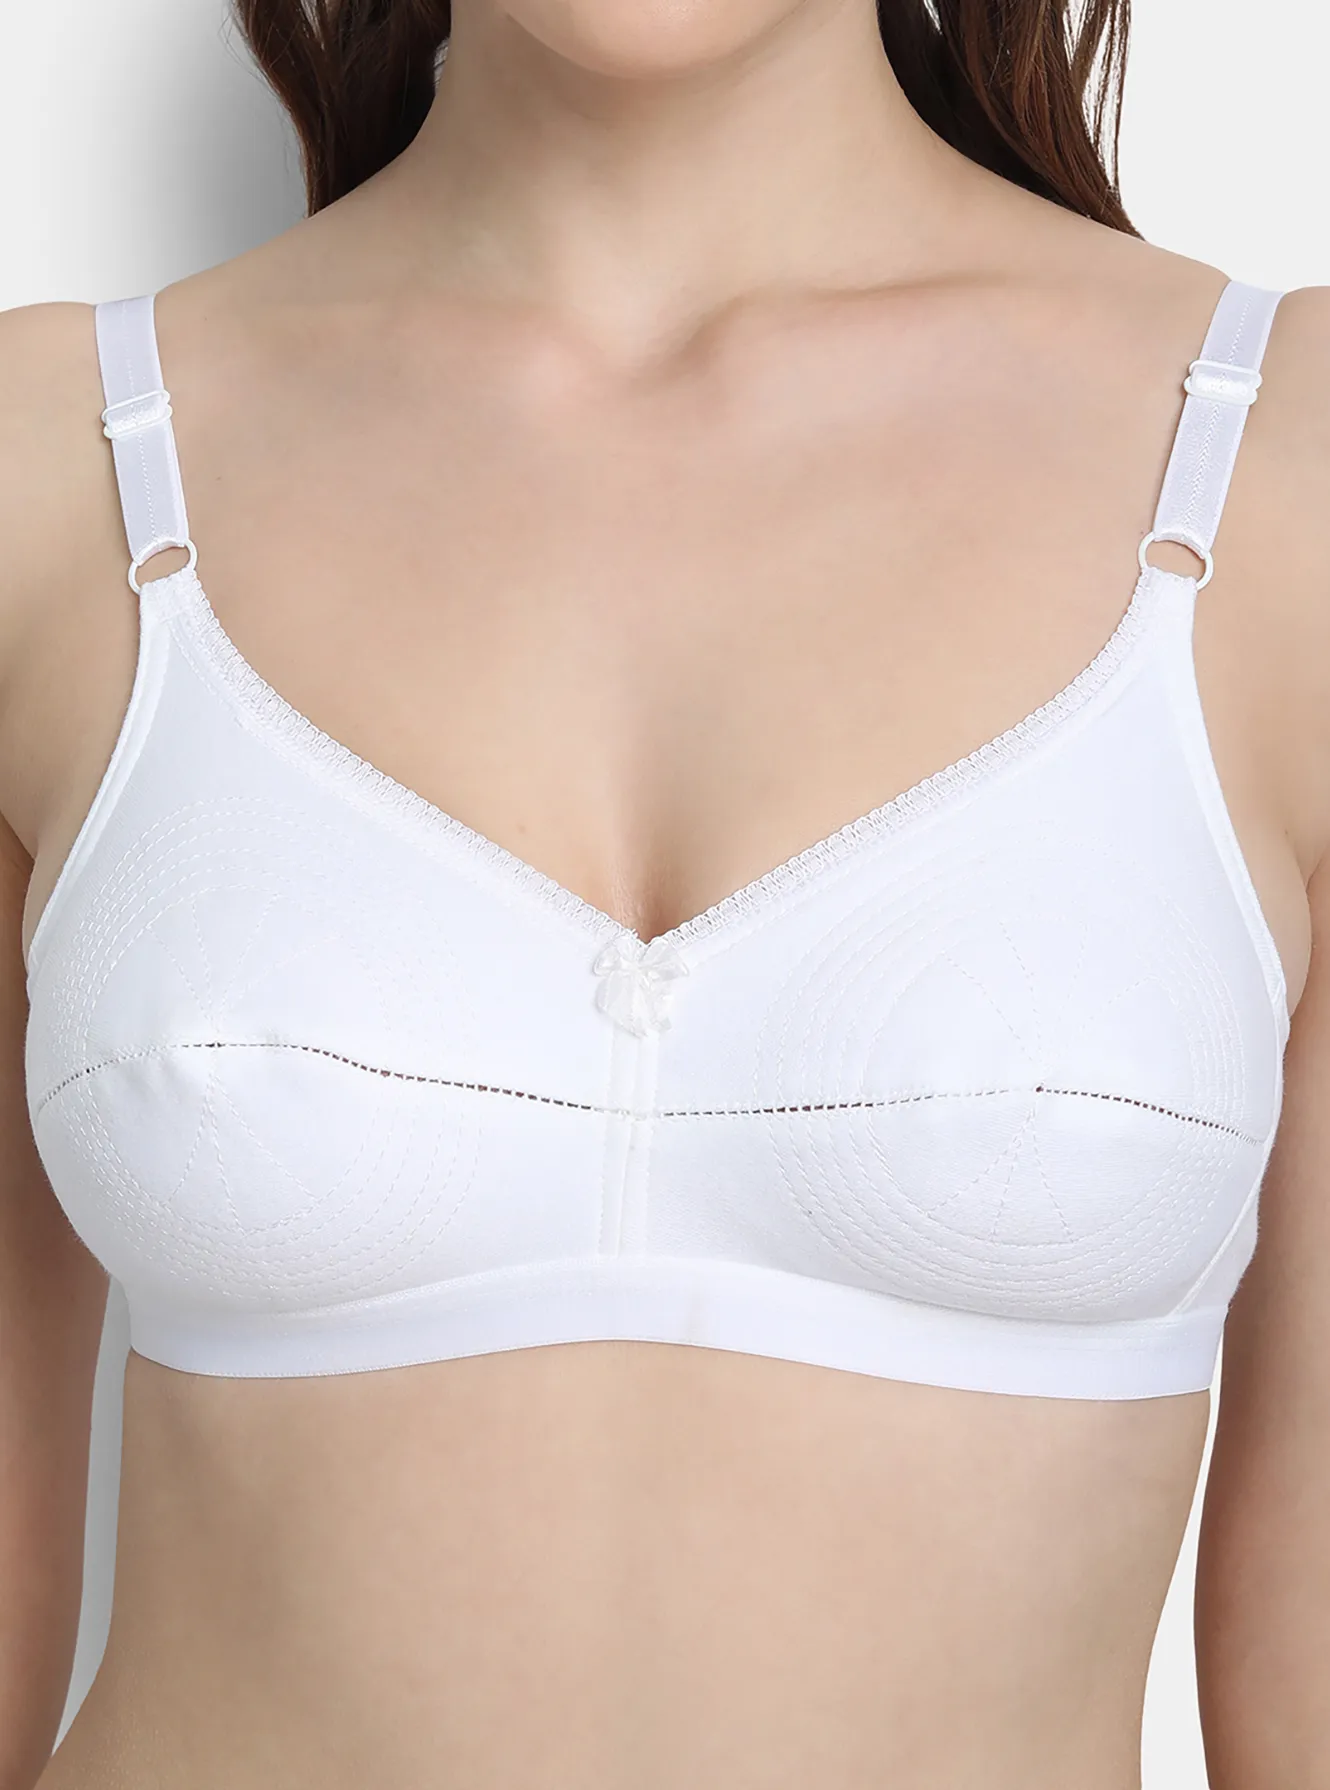 Buy Cotton Bra For Women Non Padded Non Wired White Round Stitch